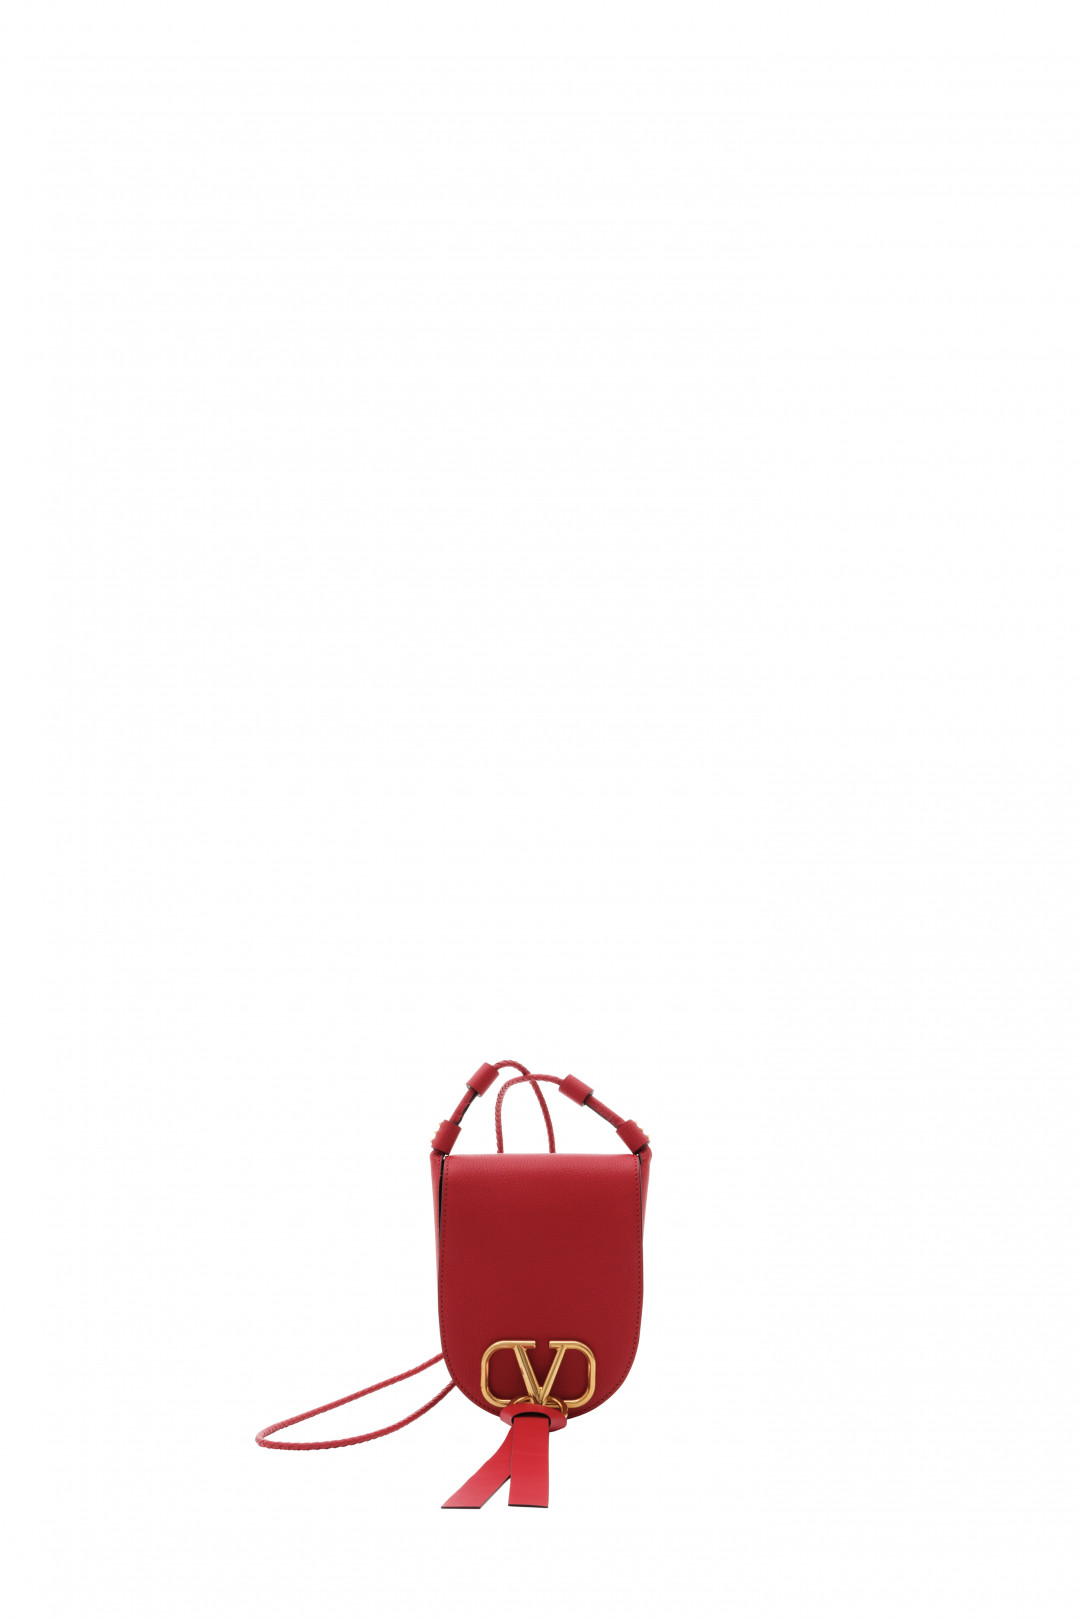 VRING SMALL SADDLE BAG（W13×H17×D4cm / 17万1,000円）